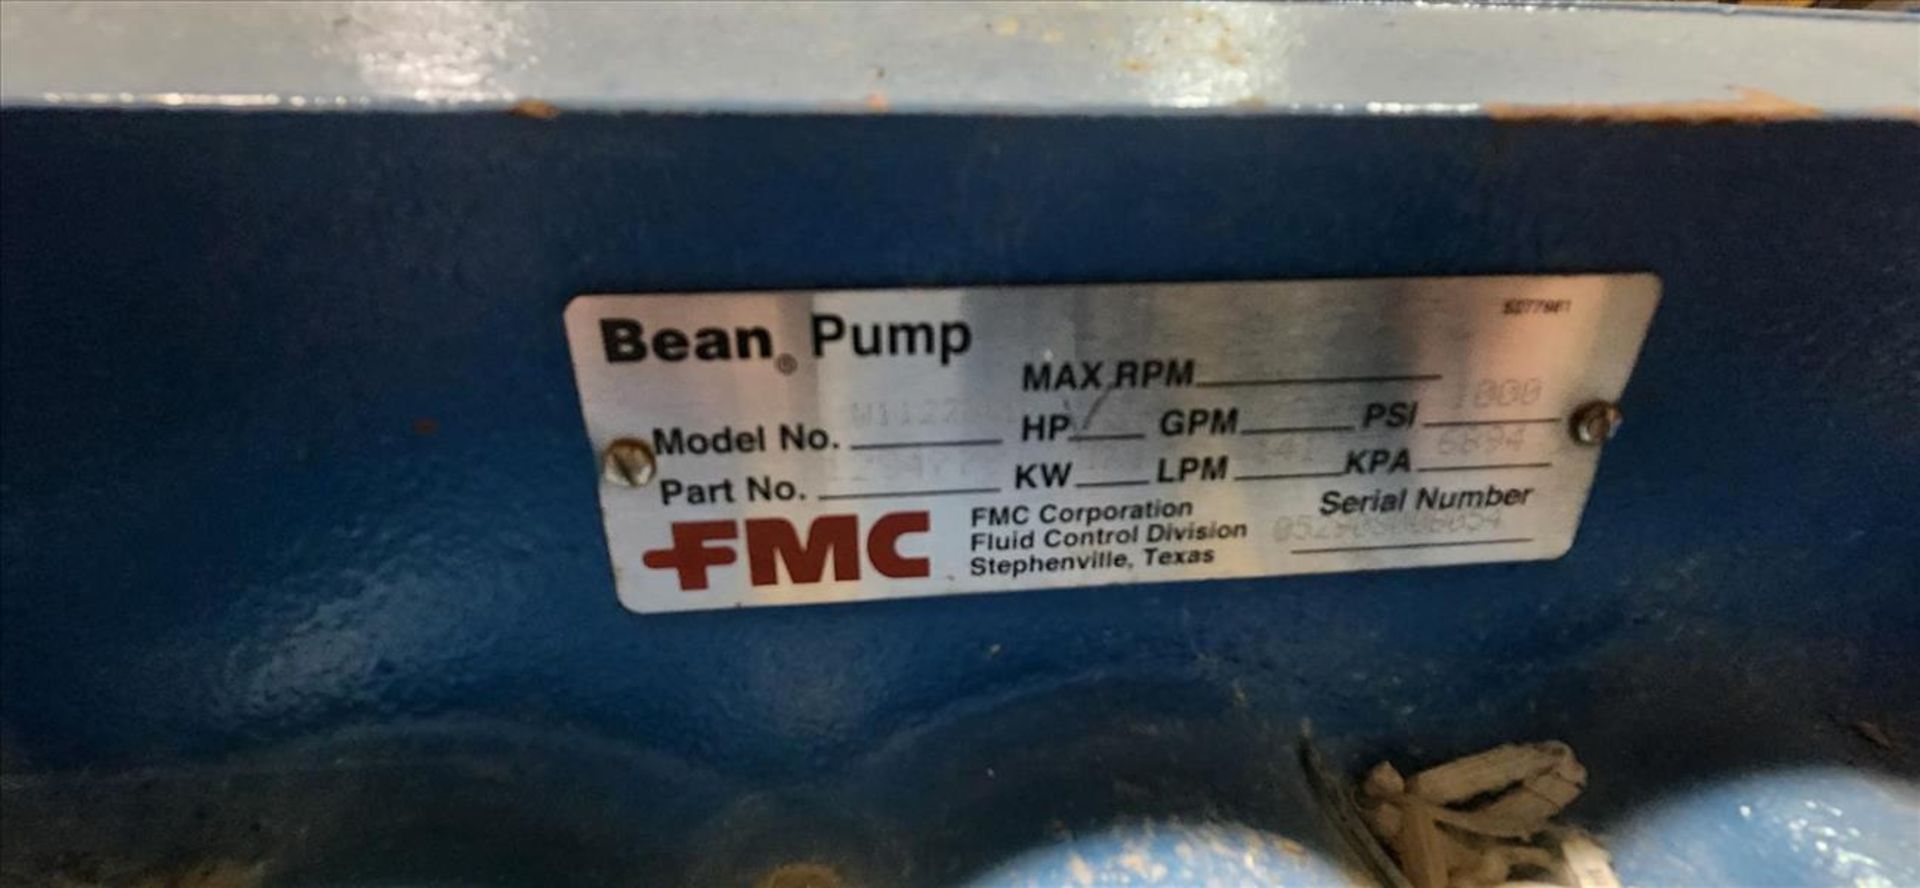 FMC bean pump, mod. W11225CD (Asset Location: Hallnor Yard) {Day 1} [TAG 1237 / LOC 128155-4] - Image 2 of 2